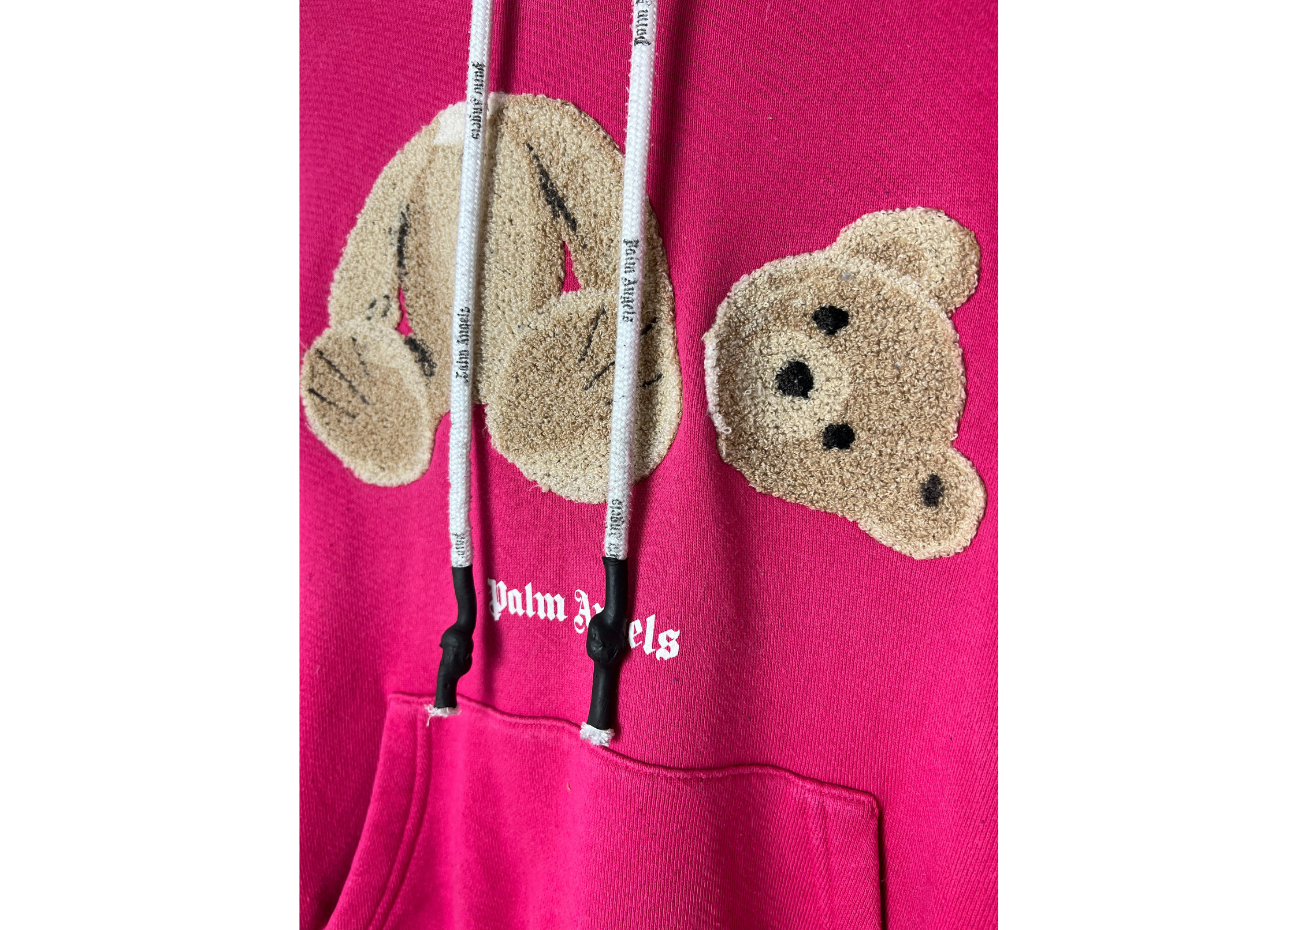 Palm Angels Hoodie Pink Teddy Bear COND 8.8/10